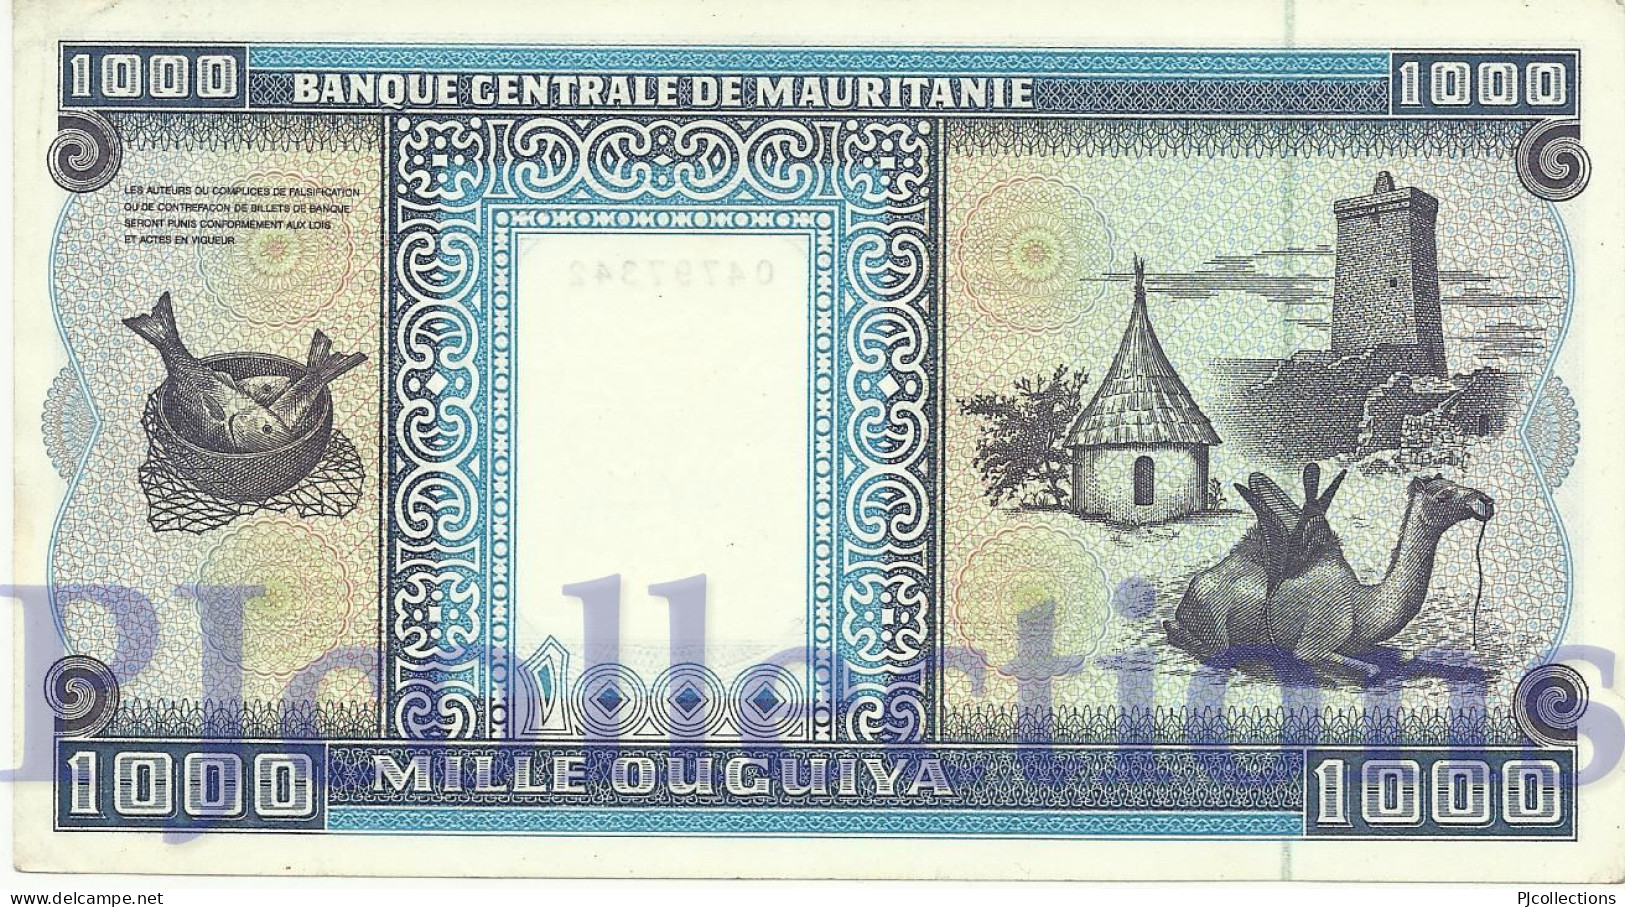 MAURITANIA 1000 OUGUIYA 2002 PICK 9c XF/AU - Mauritanien